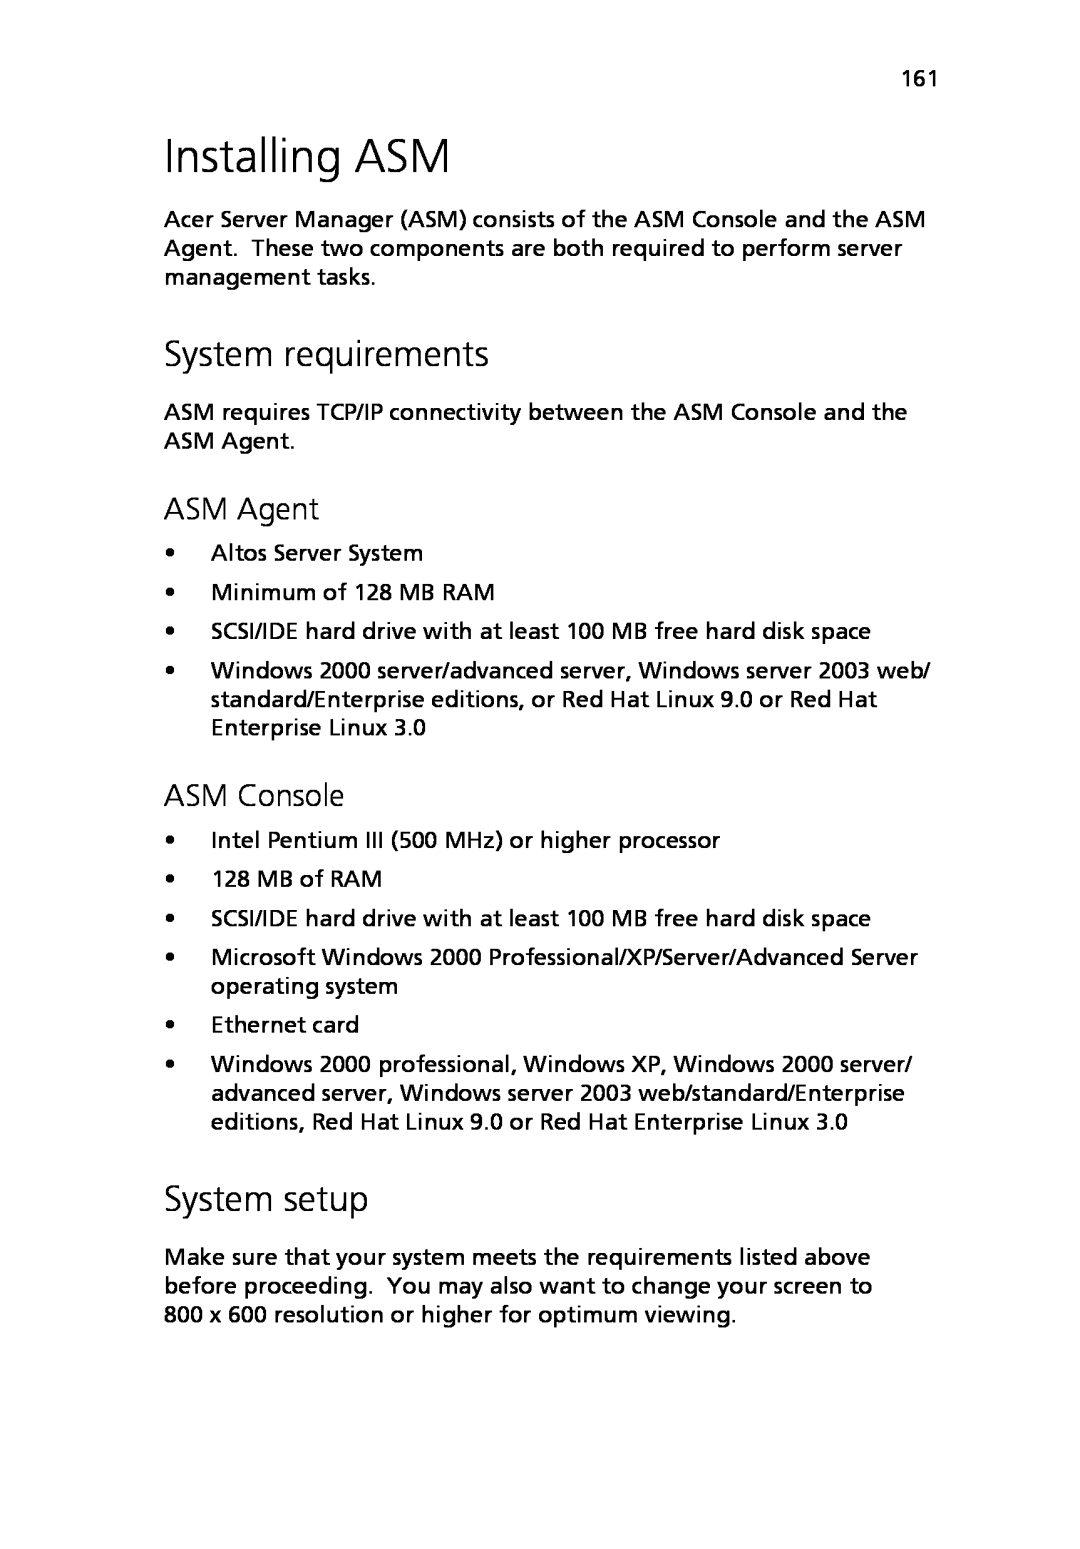 Acer Altos R710 manual Installing ASM, System requirements, System setup, ASM Agent, ASM Console 